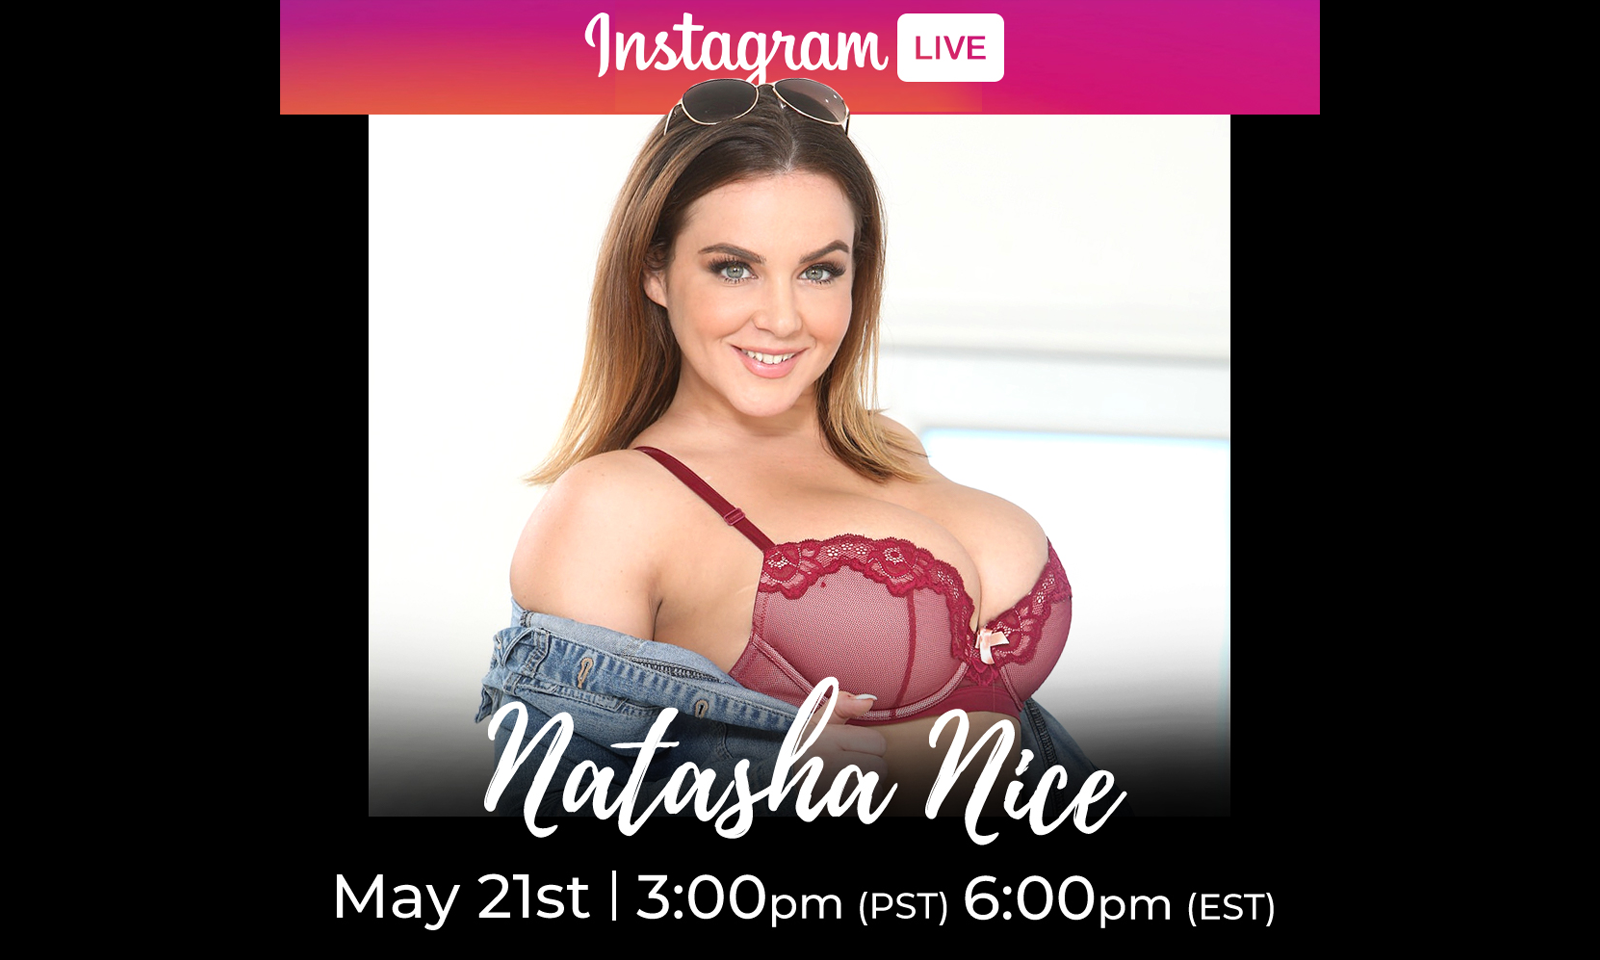 Natasha nice live